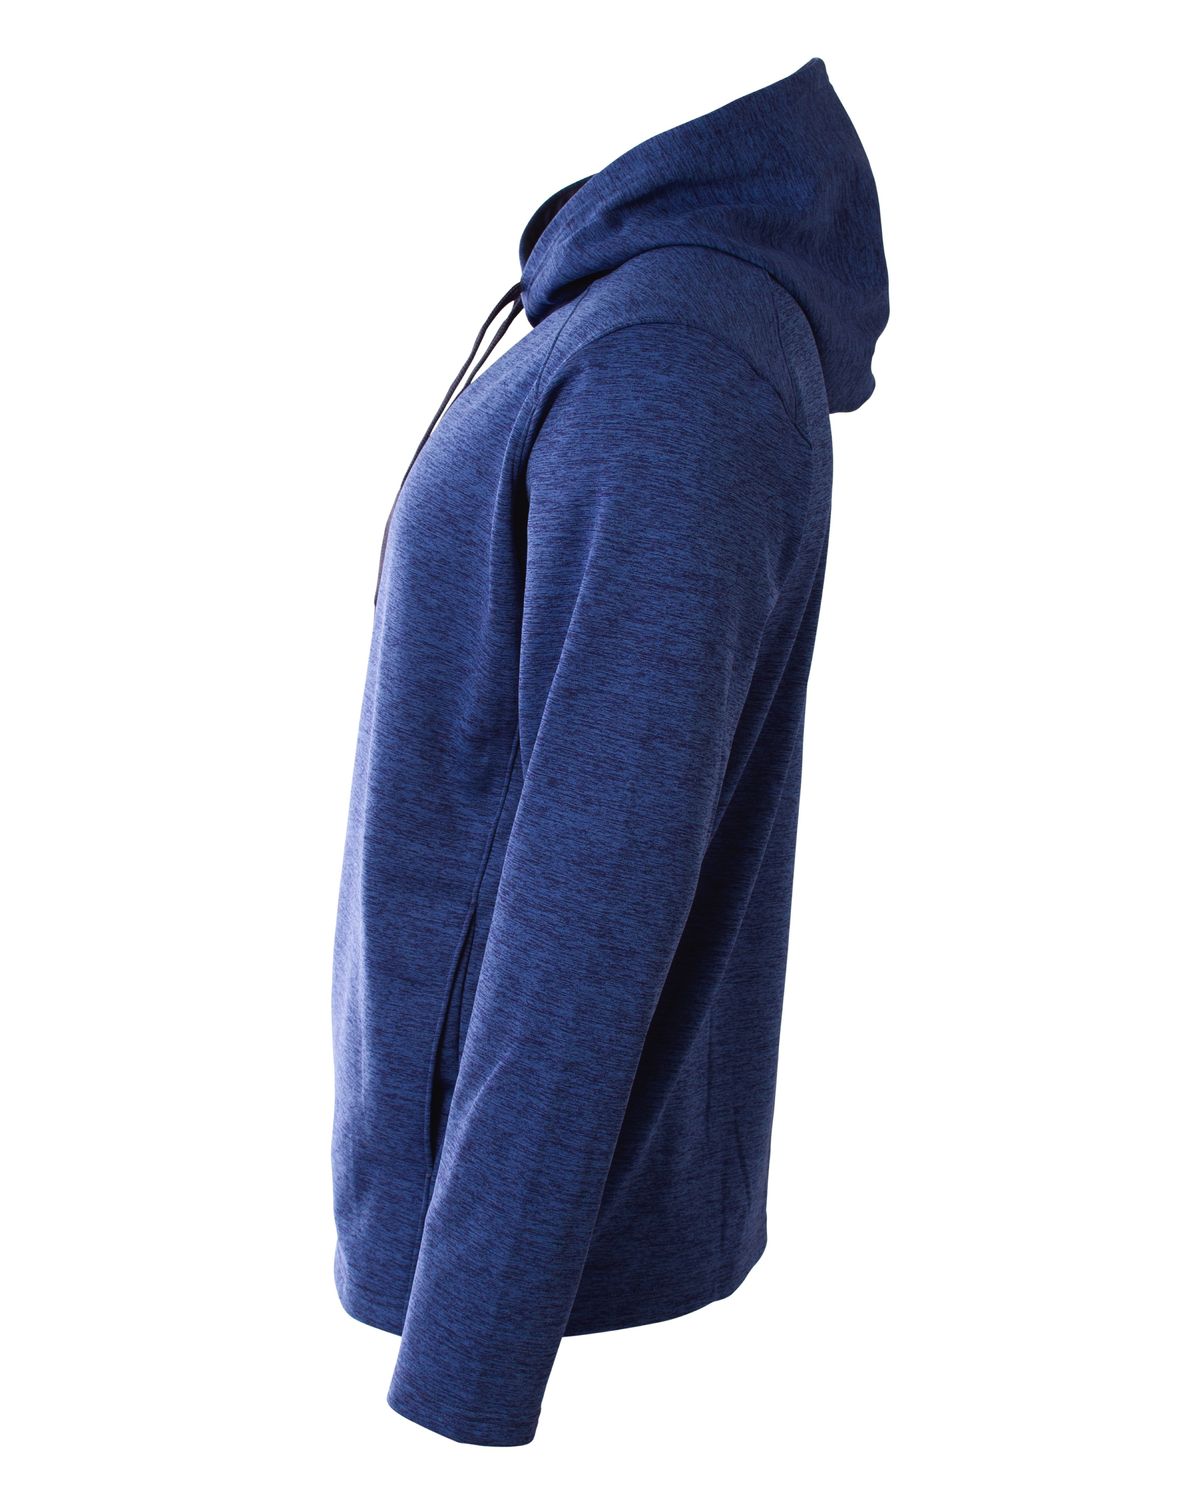 'A4 N4103 Men's Tonal Space Dye-Tech Fleece Hoodie'